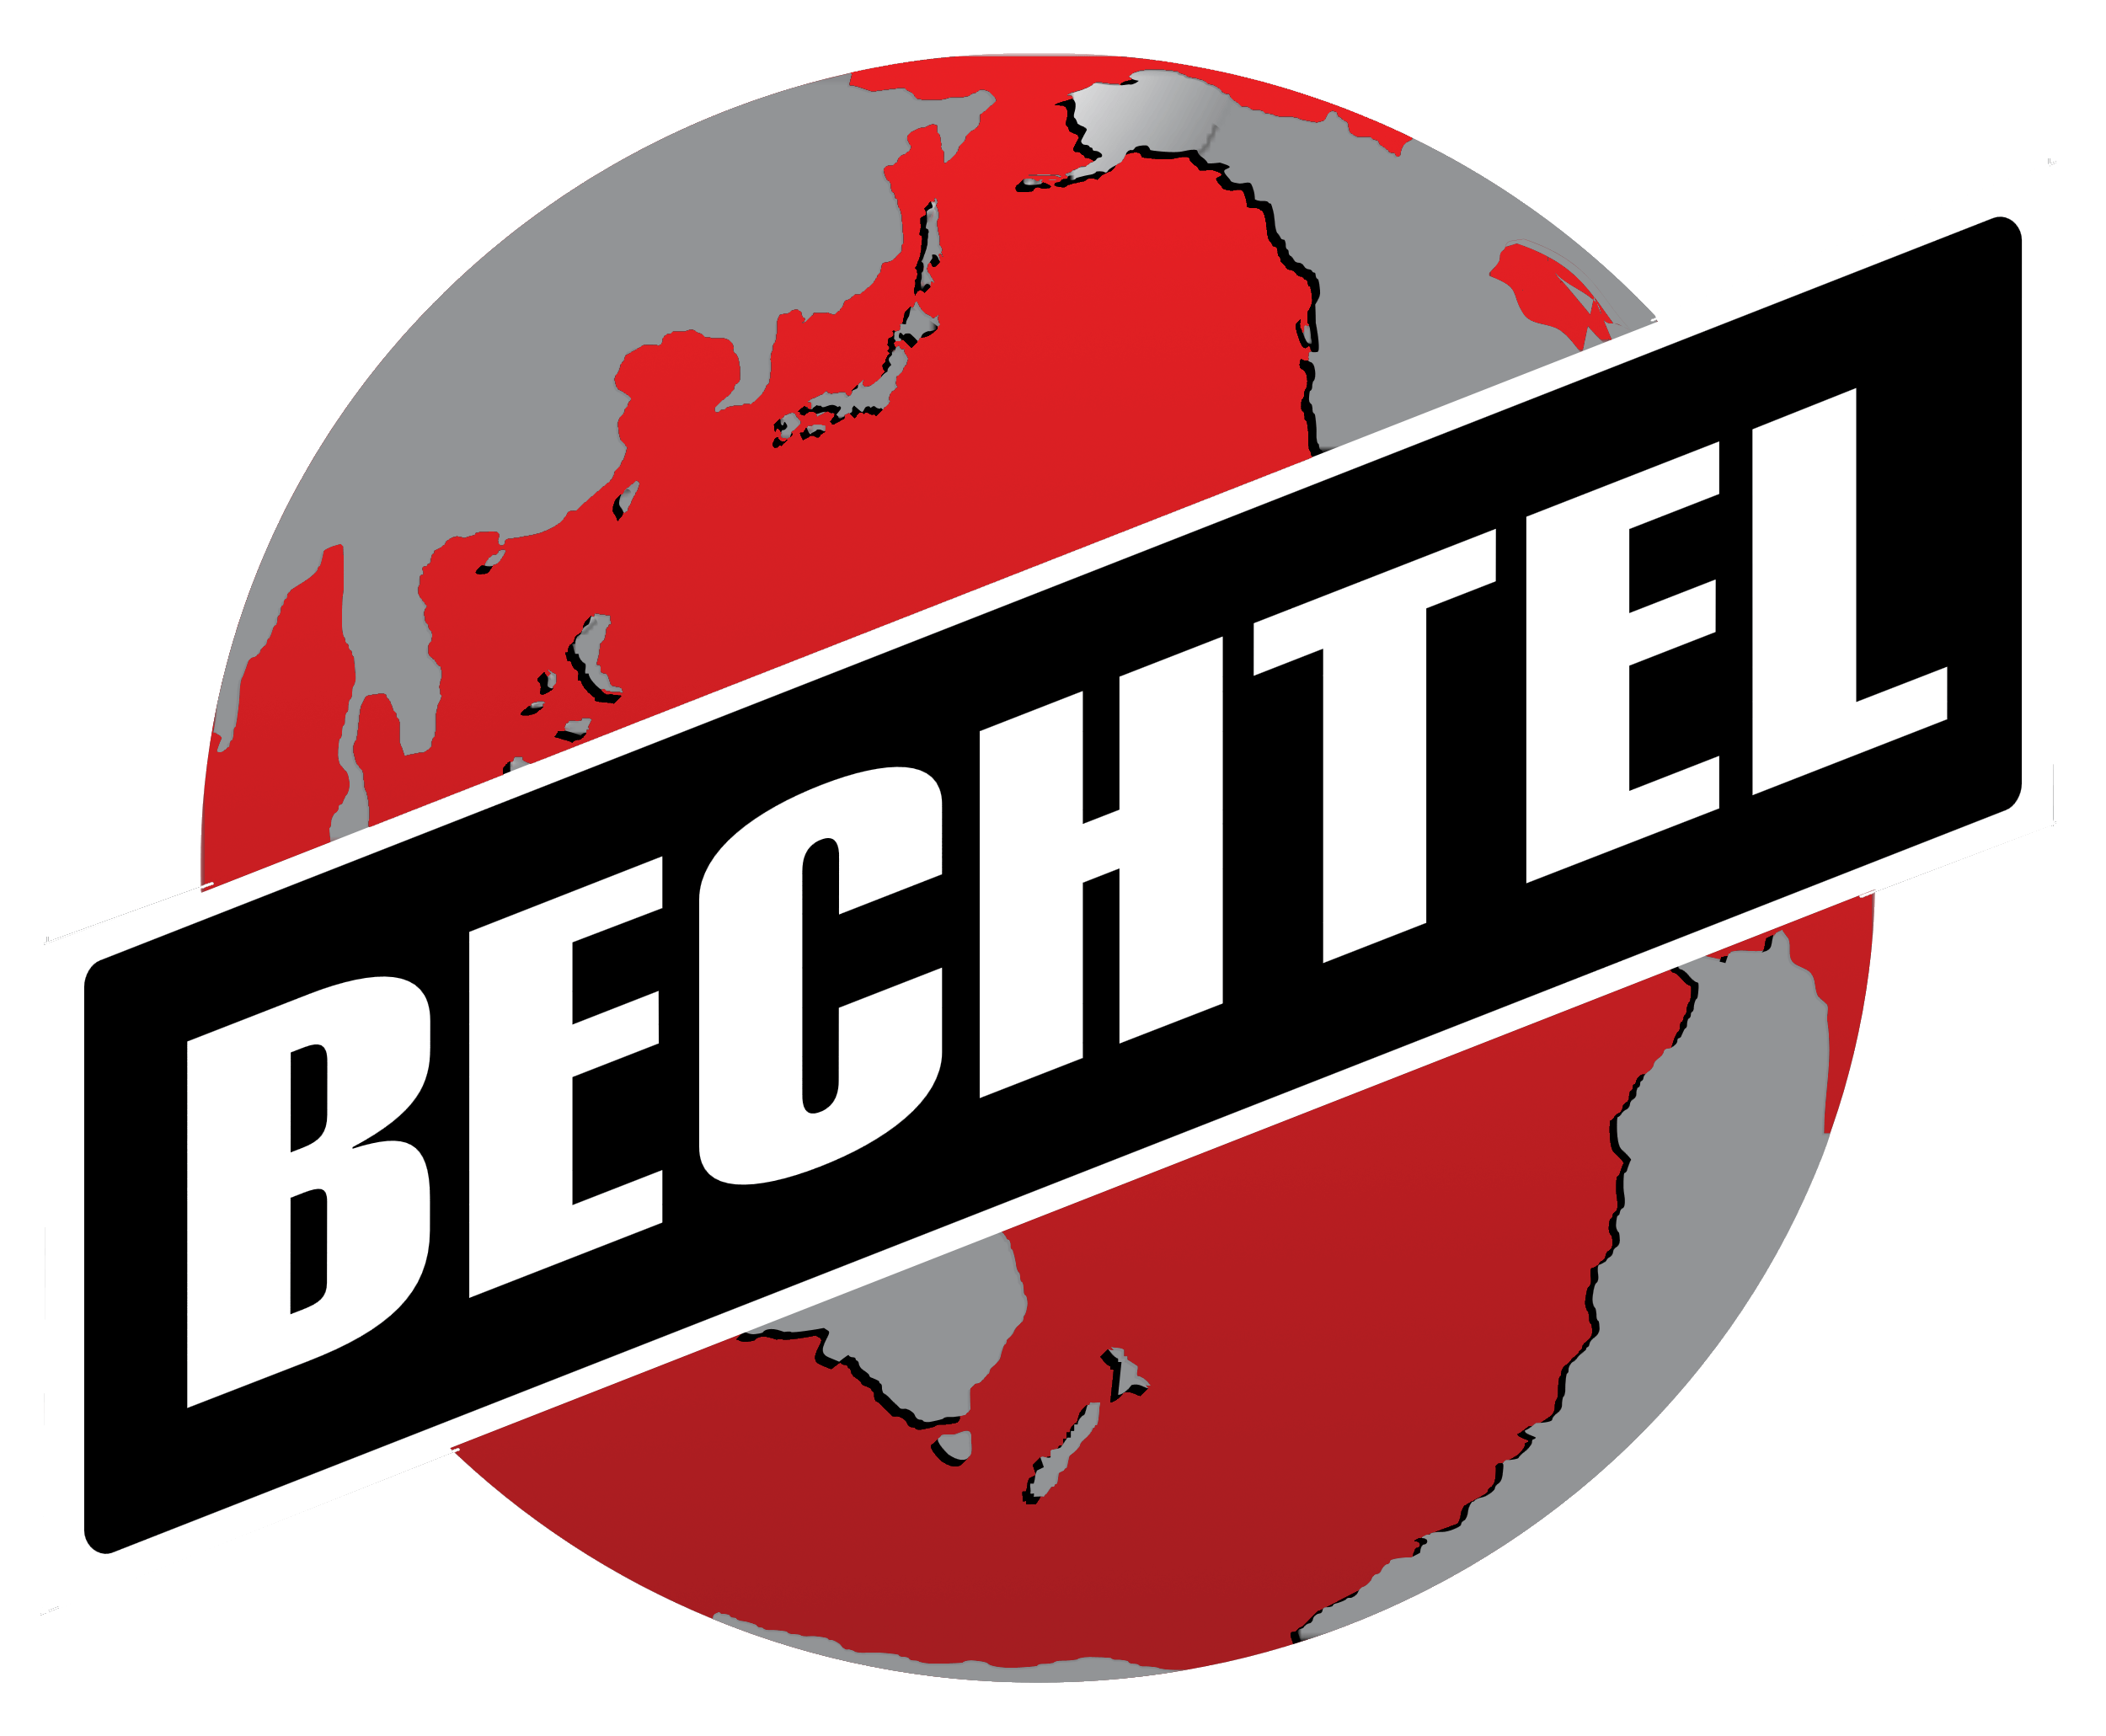 Bechtel logo, logotype